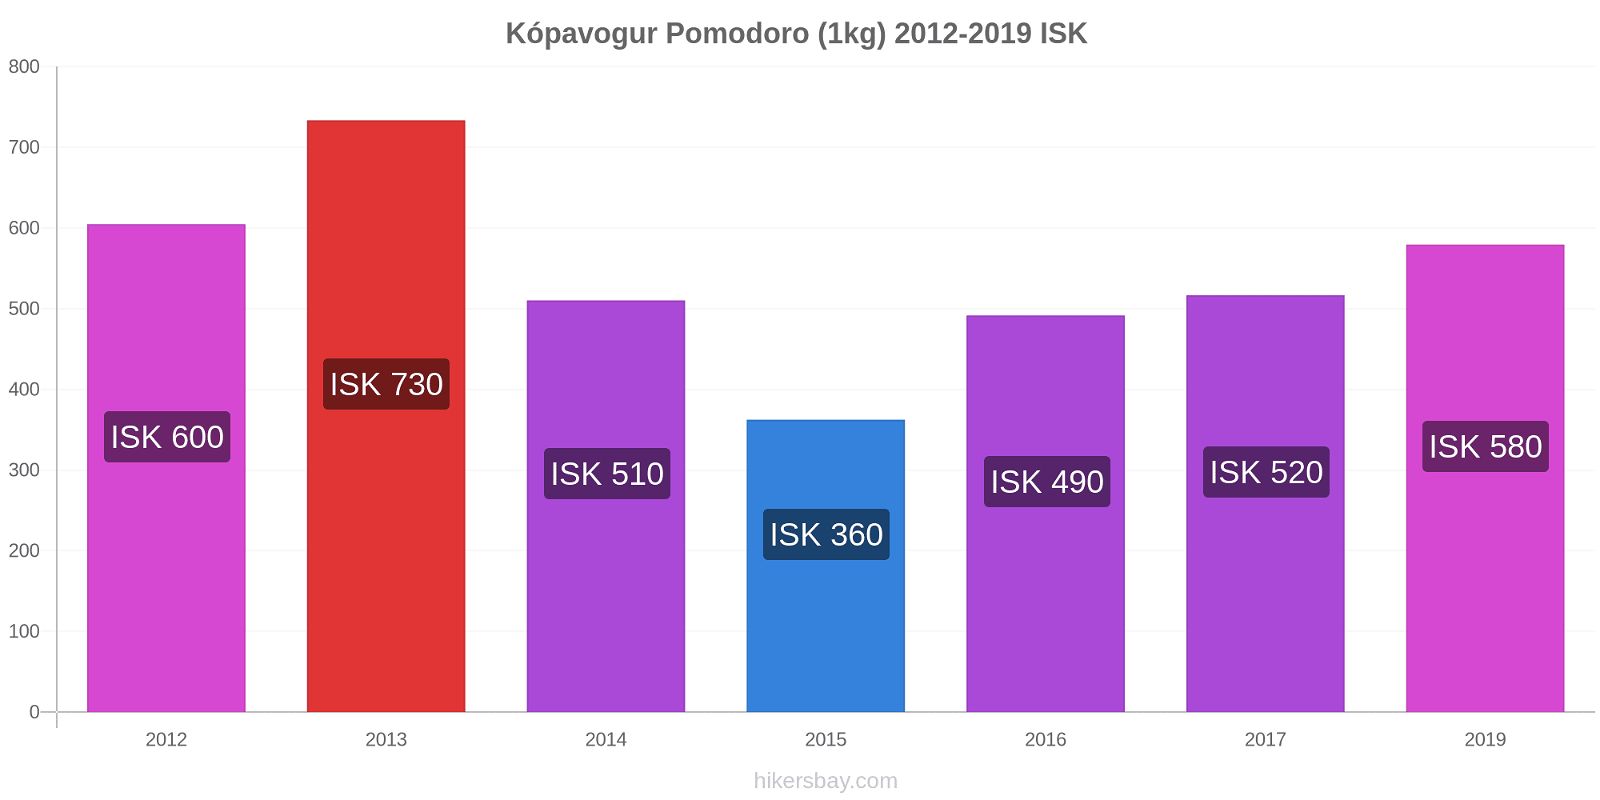 Kópavogur variazioni di prezzo Pomodoro (1kg) hikersbay.com